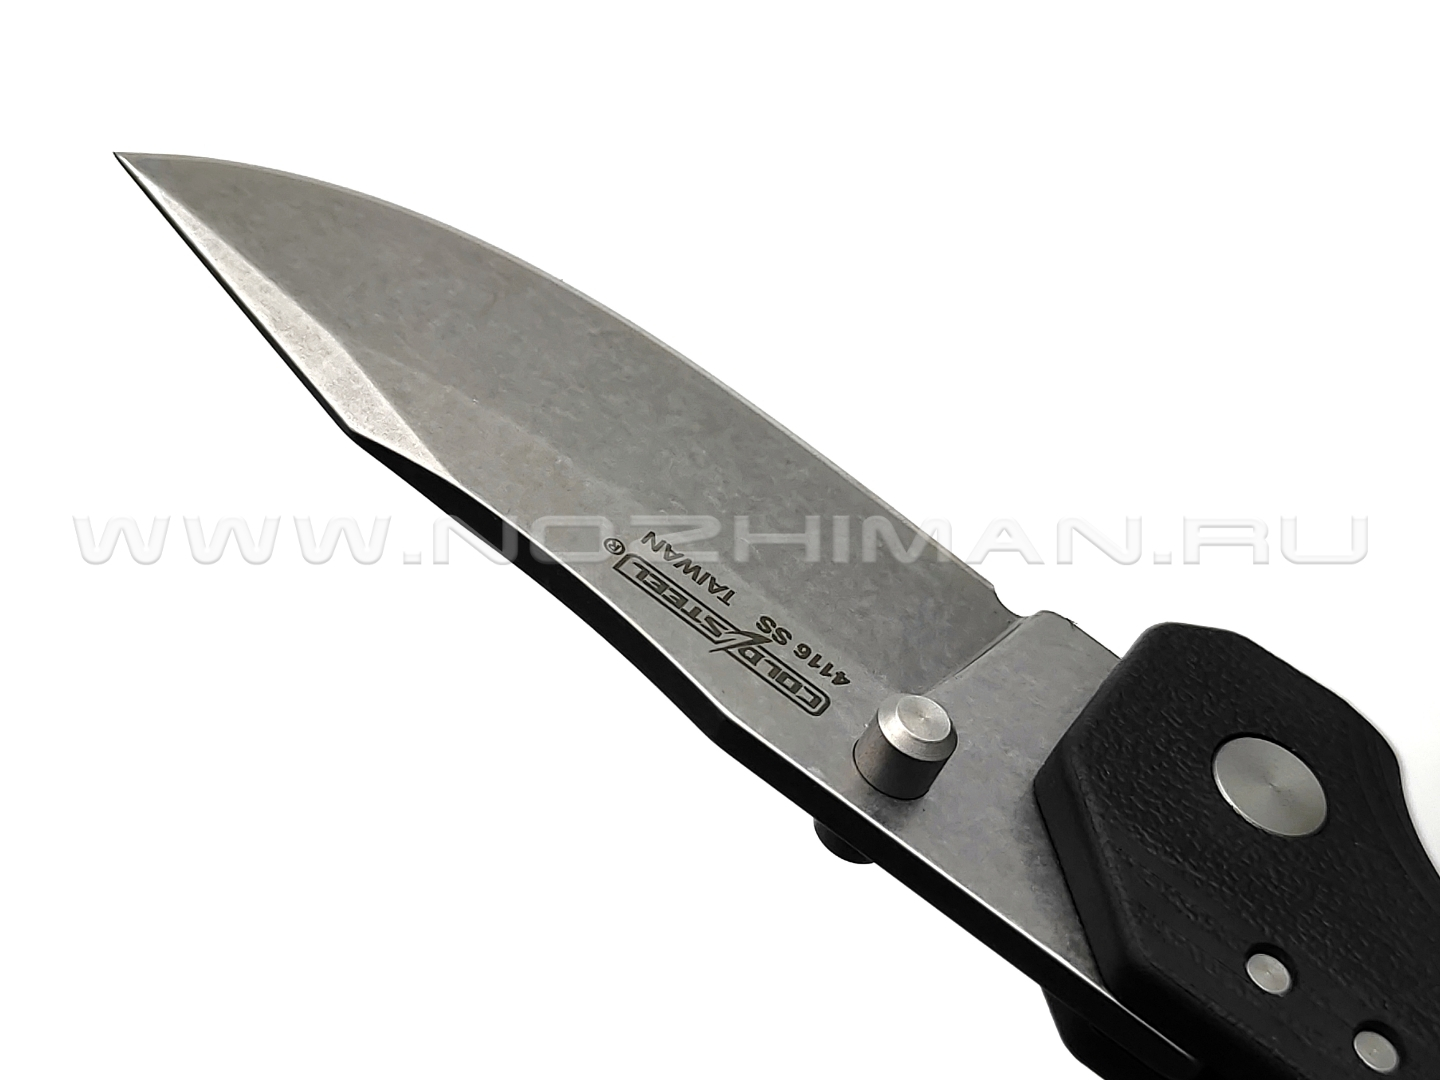 Нож Cold Steel Engage 2.5" FL-25DPLC сталь 1.4116, рукоять Glass-filled nylon